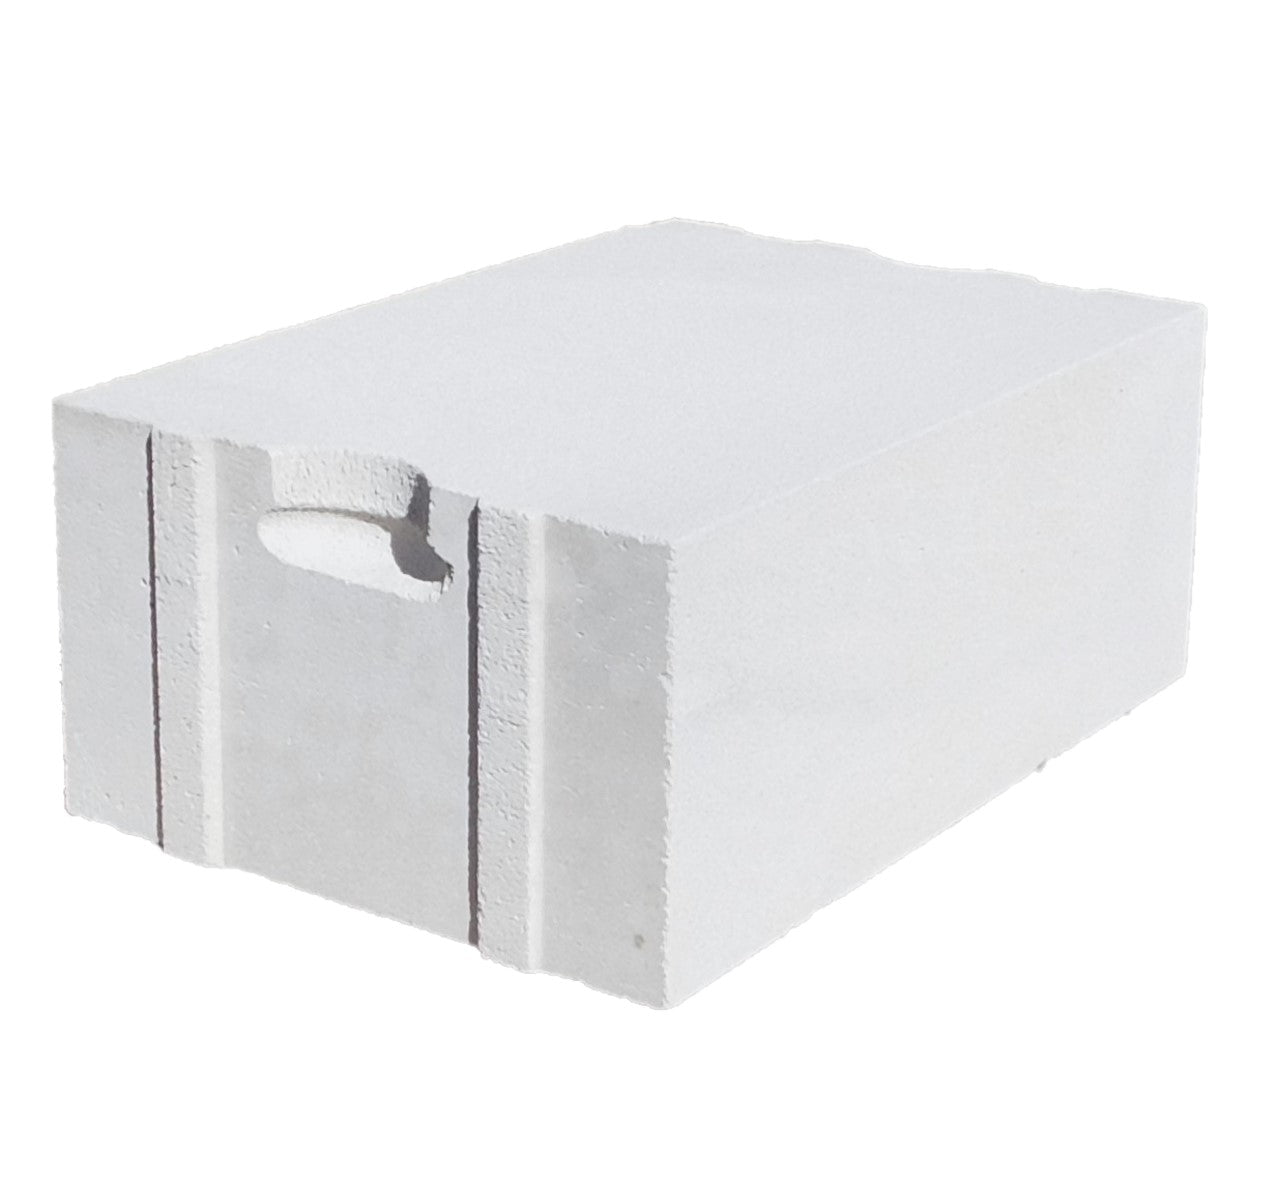 Aerated concrete Block G4 500x250x365mm (pallet)